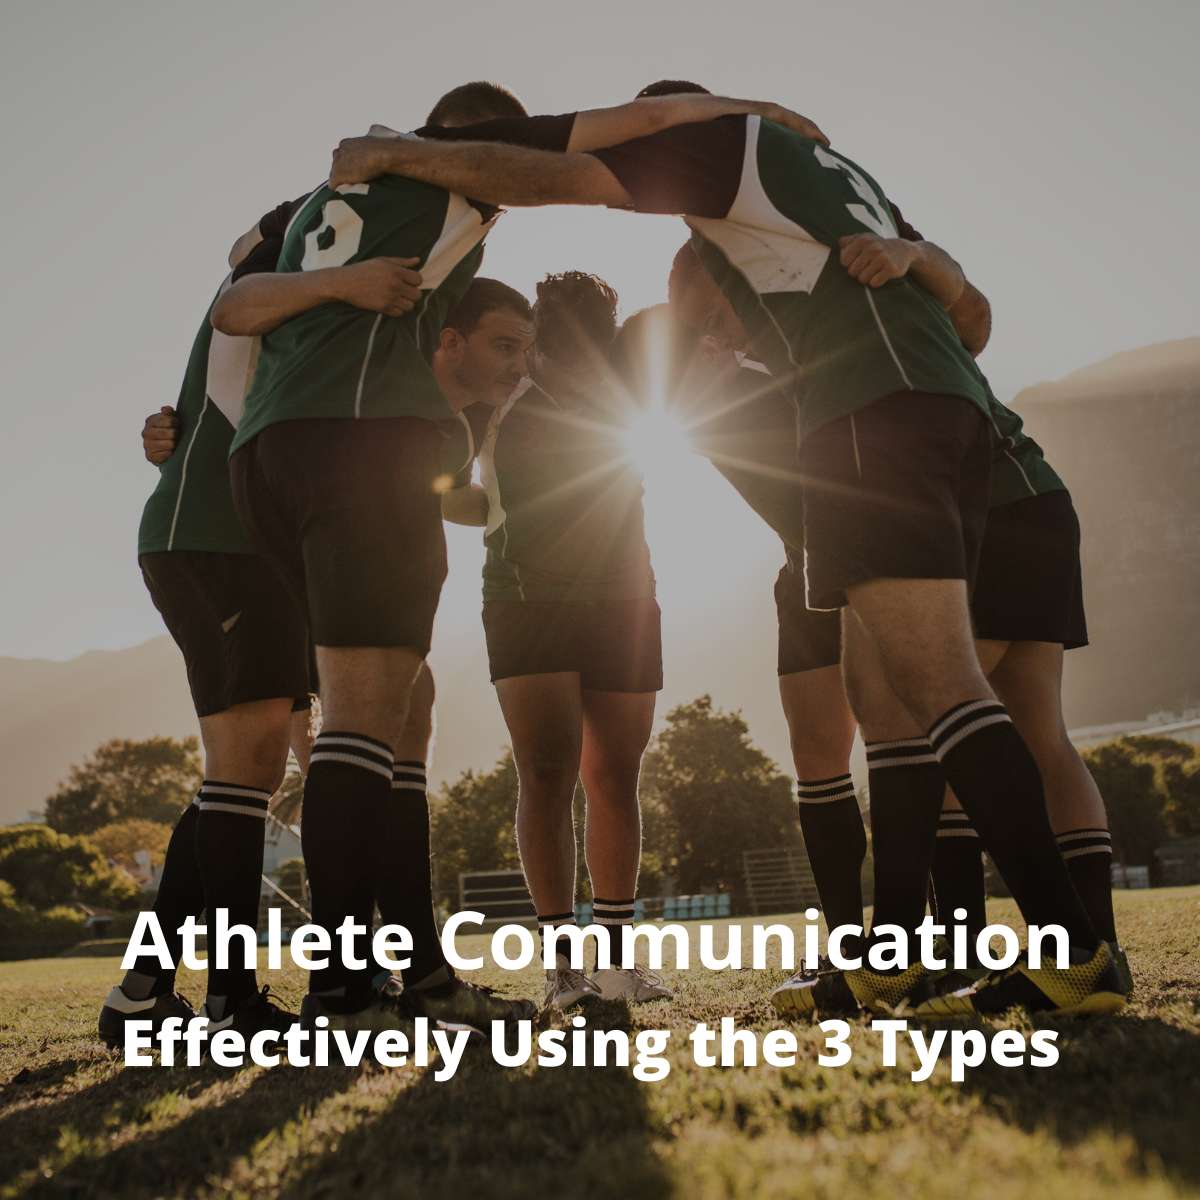 Athlete Communication: Effectively Using the 3 Types